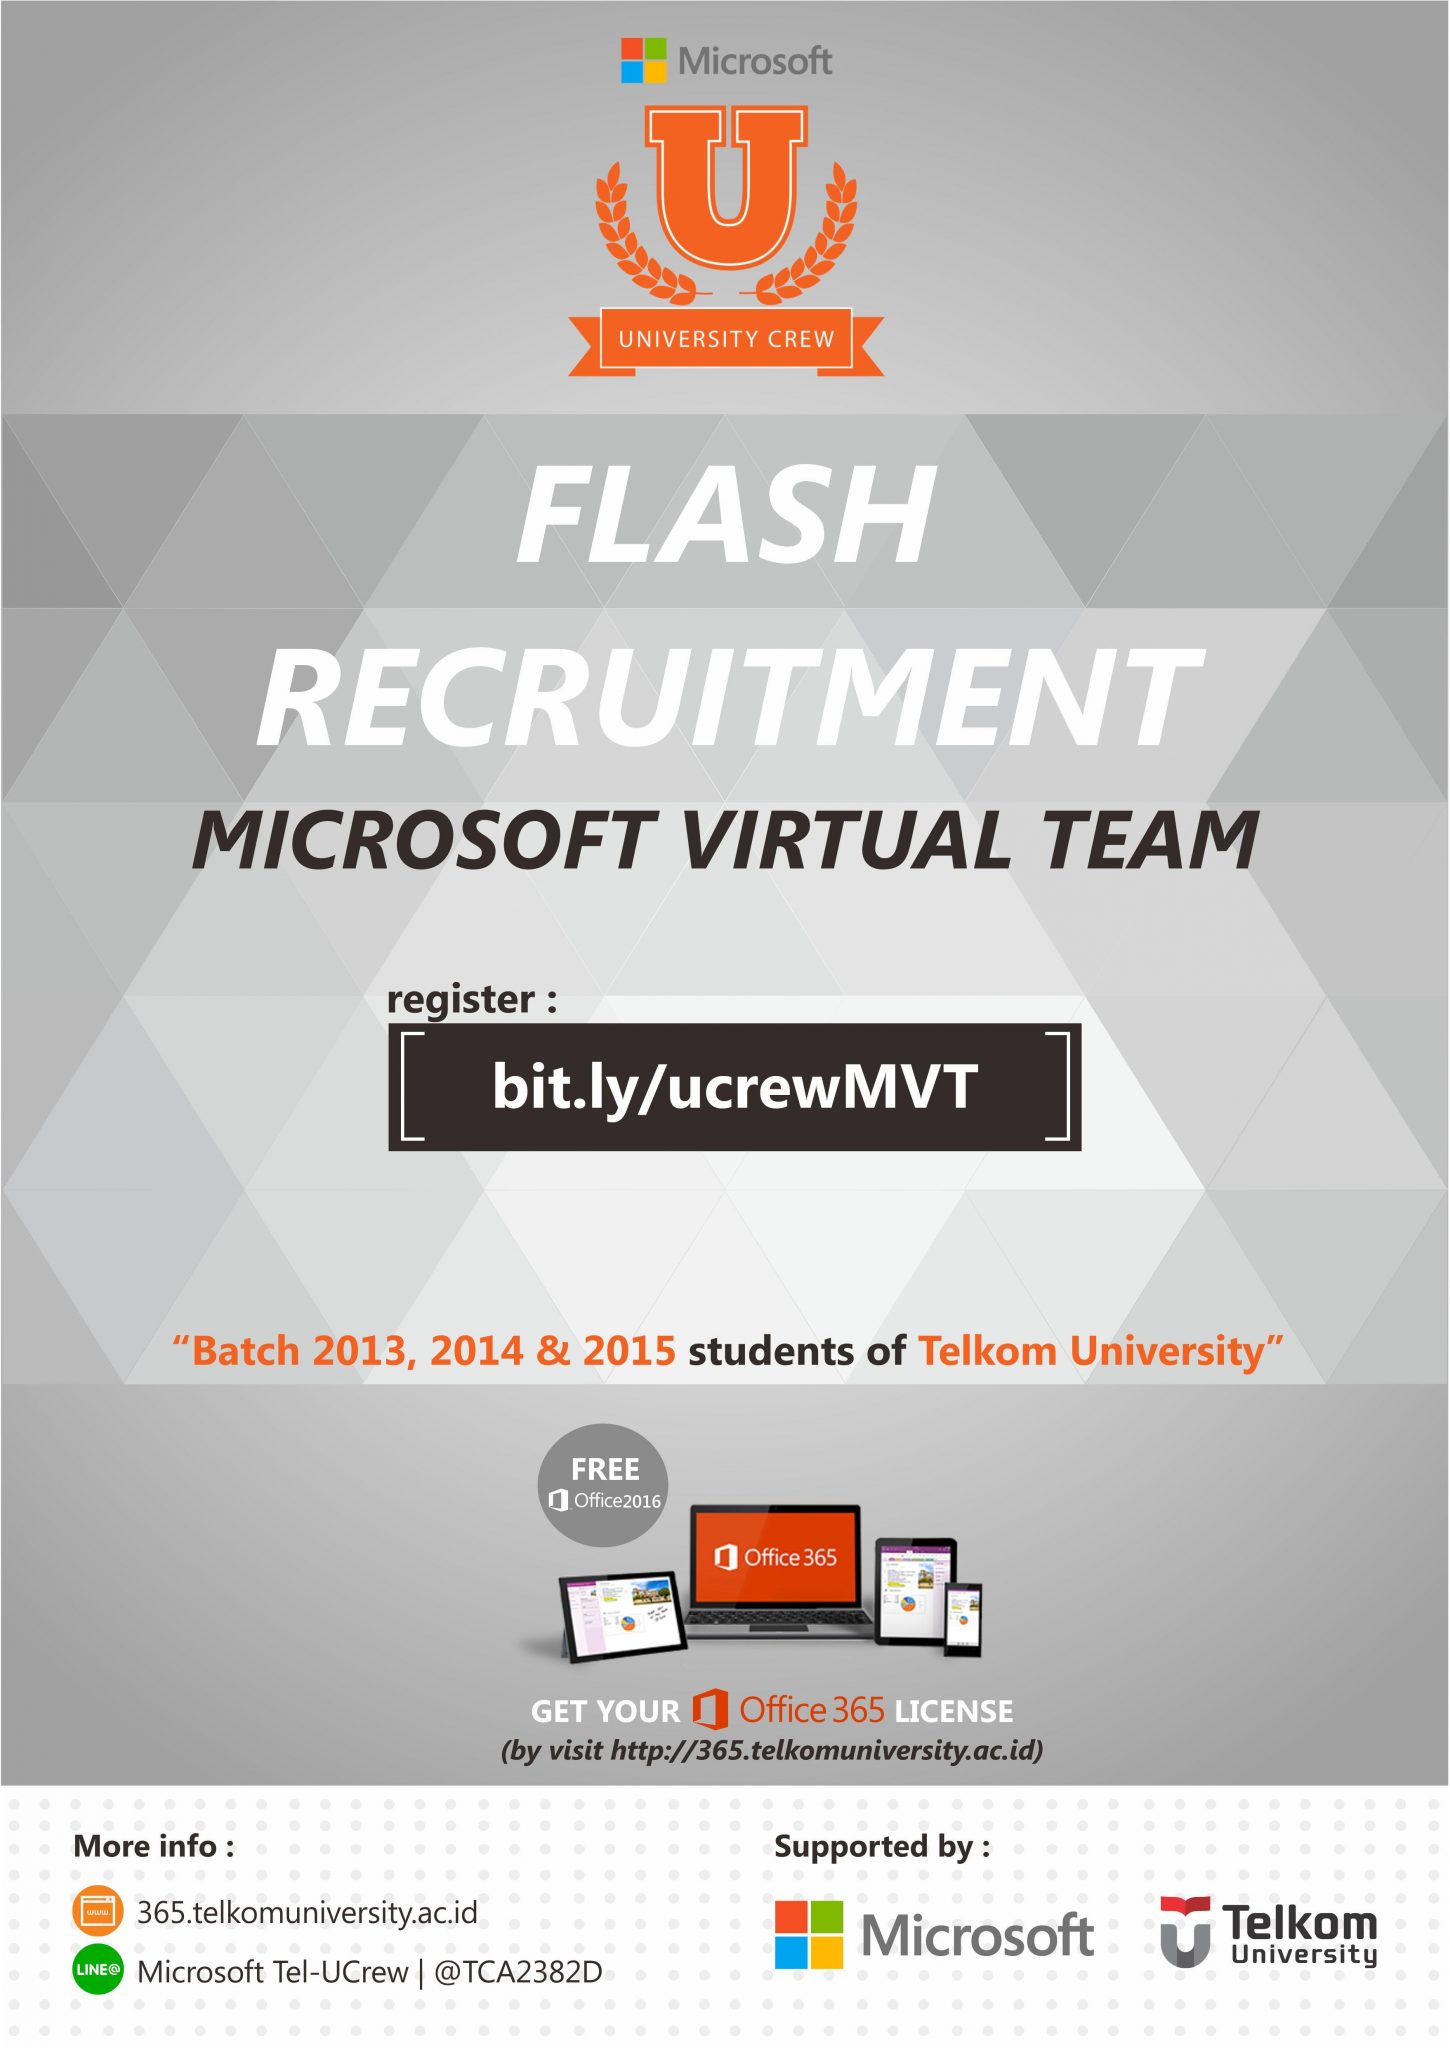 Microsoft Virtual Team – Telkom University Flash Recruitment